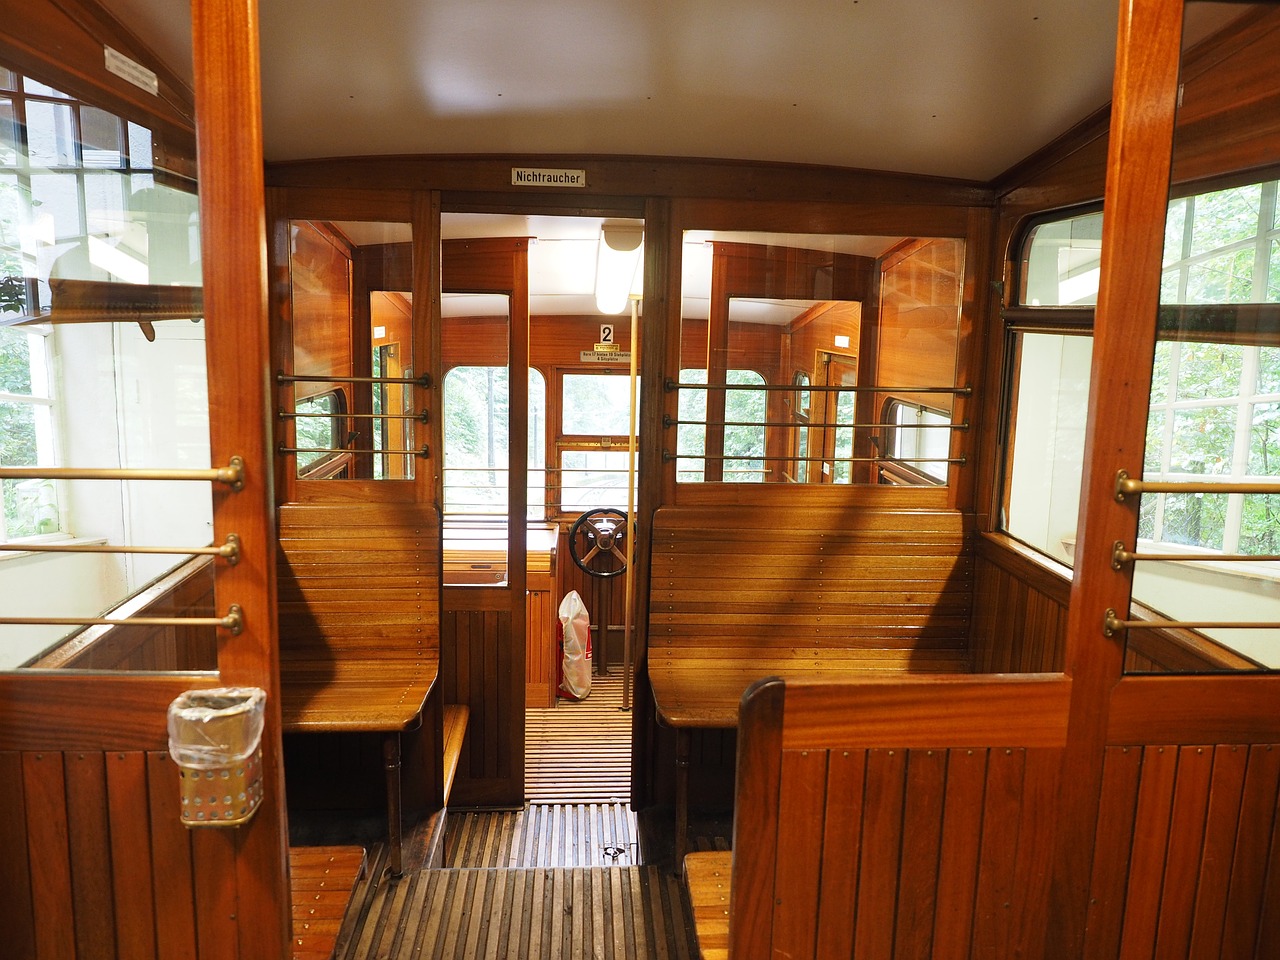 funicular railway dare interior free photo